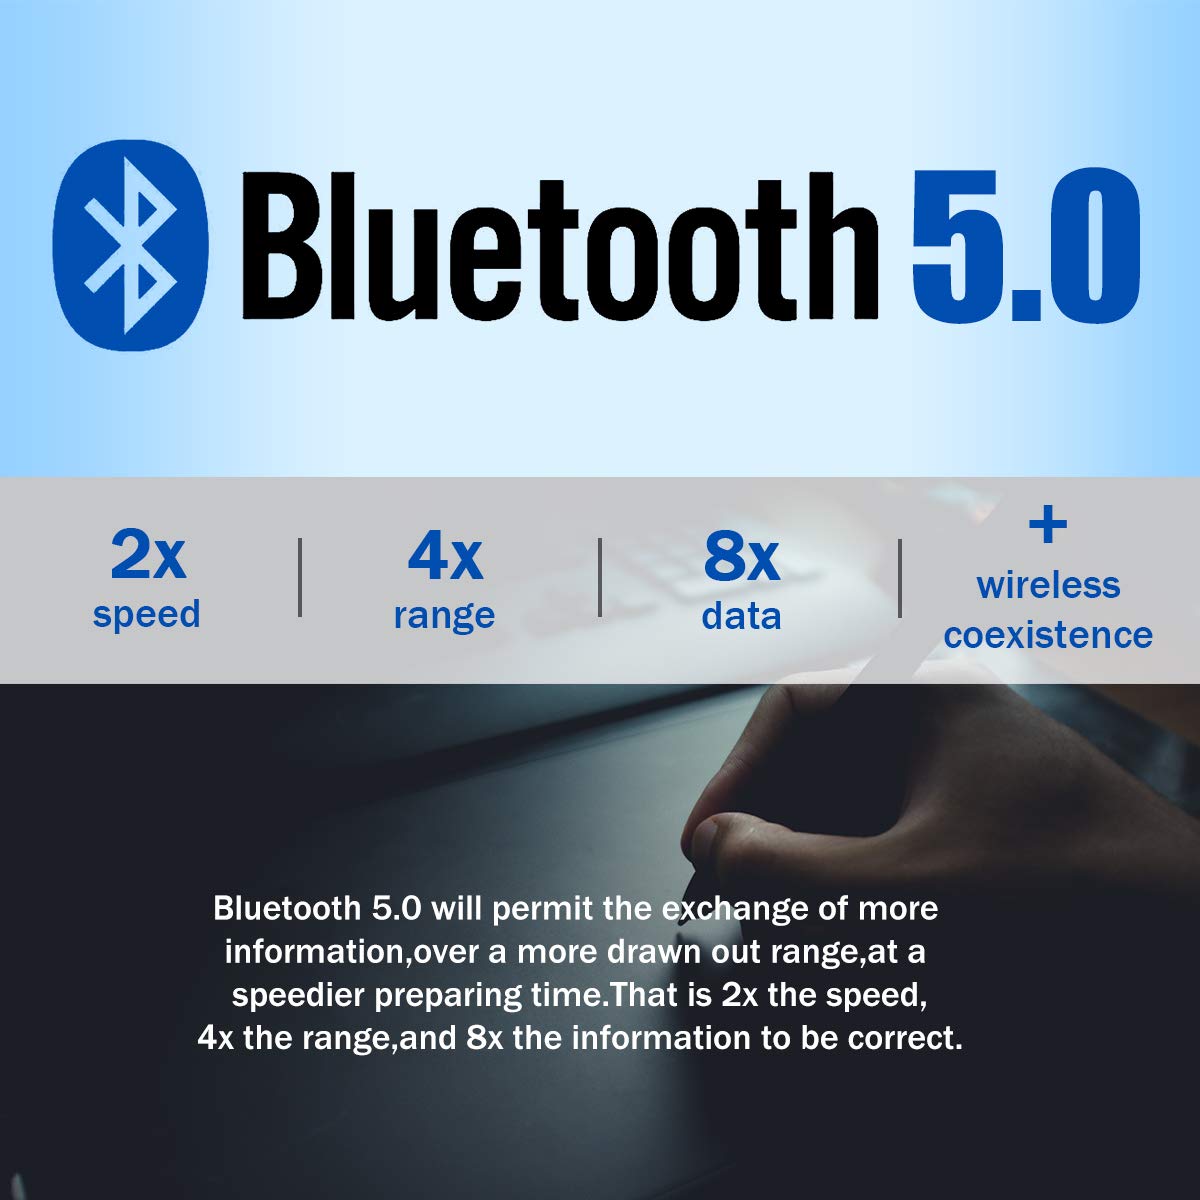 5.0 Wireless Bluetooth Adapter